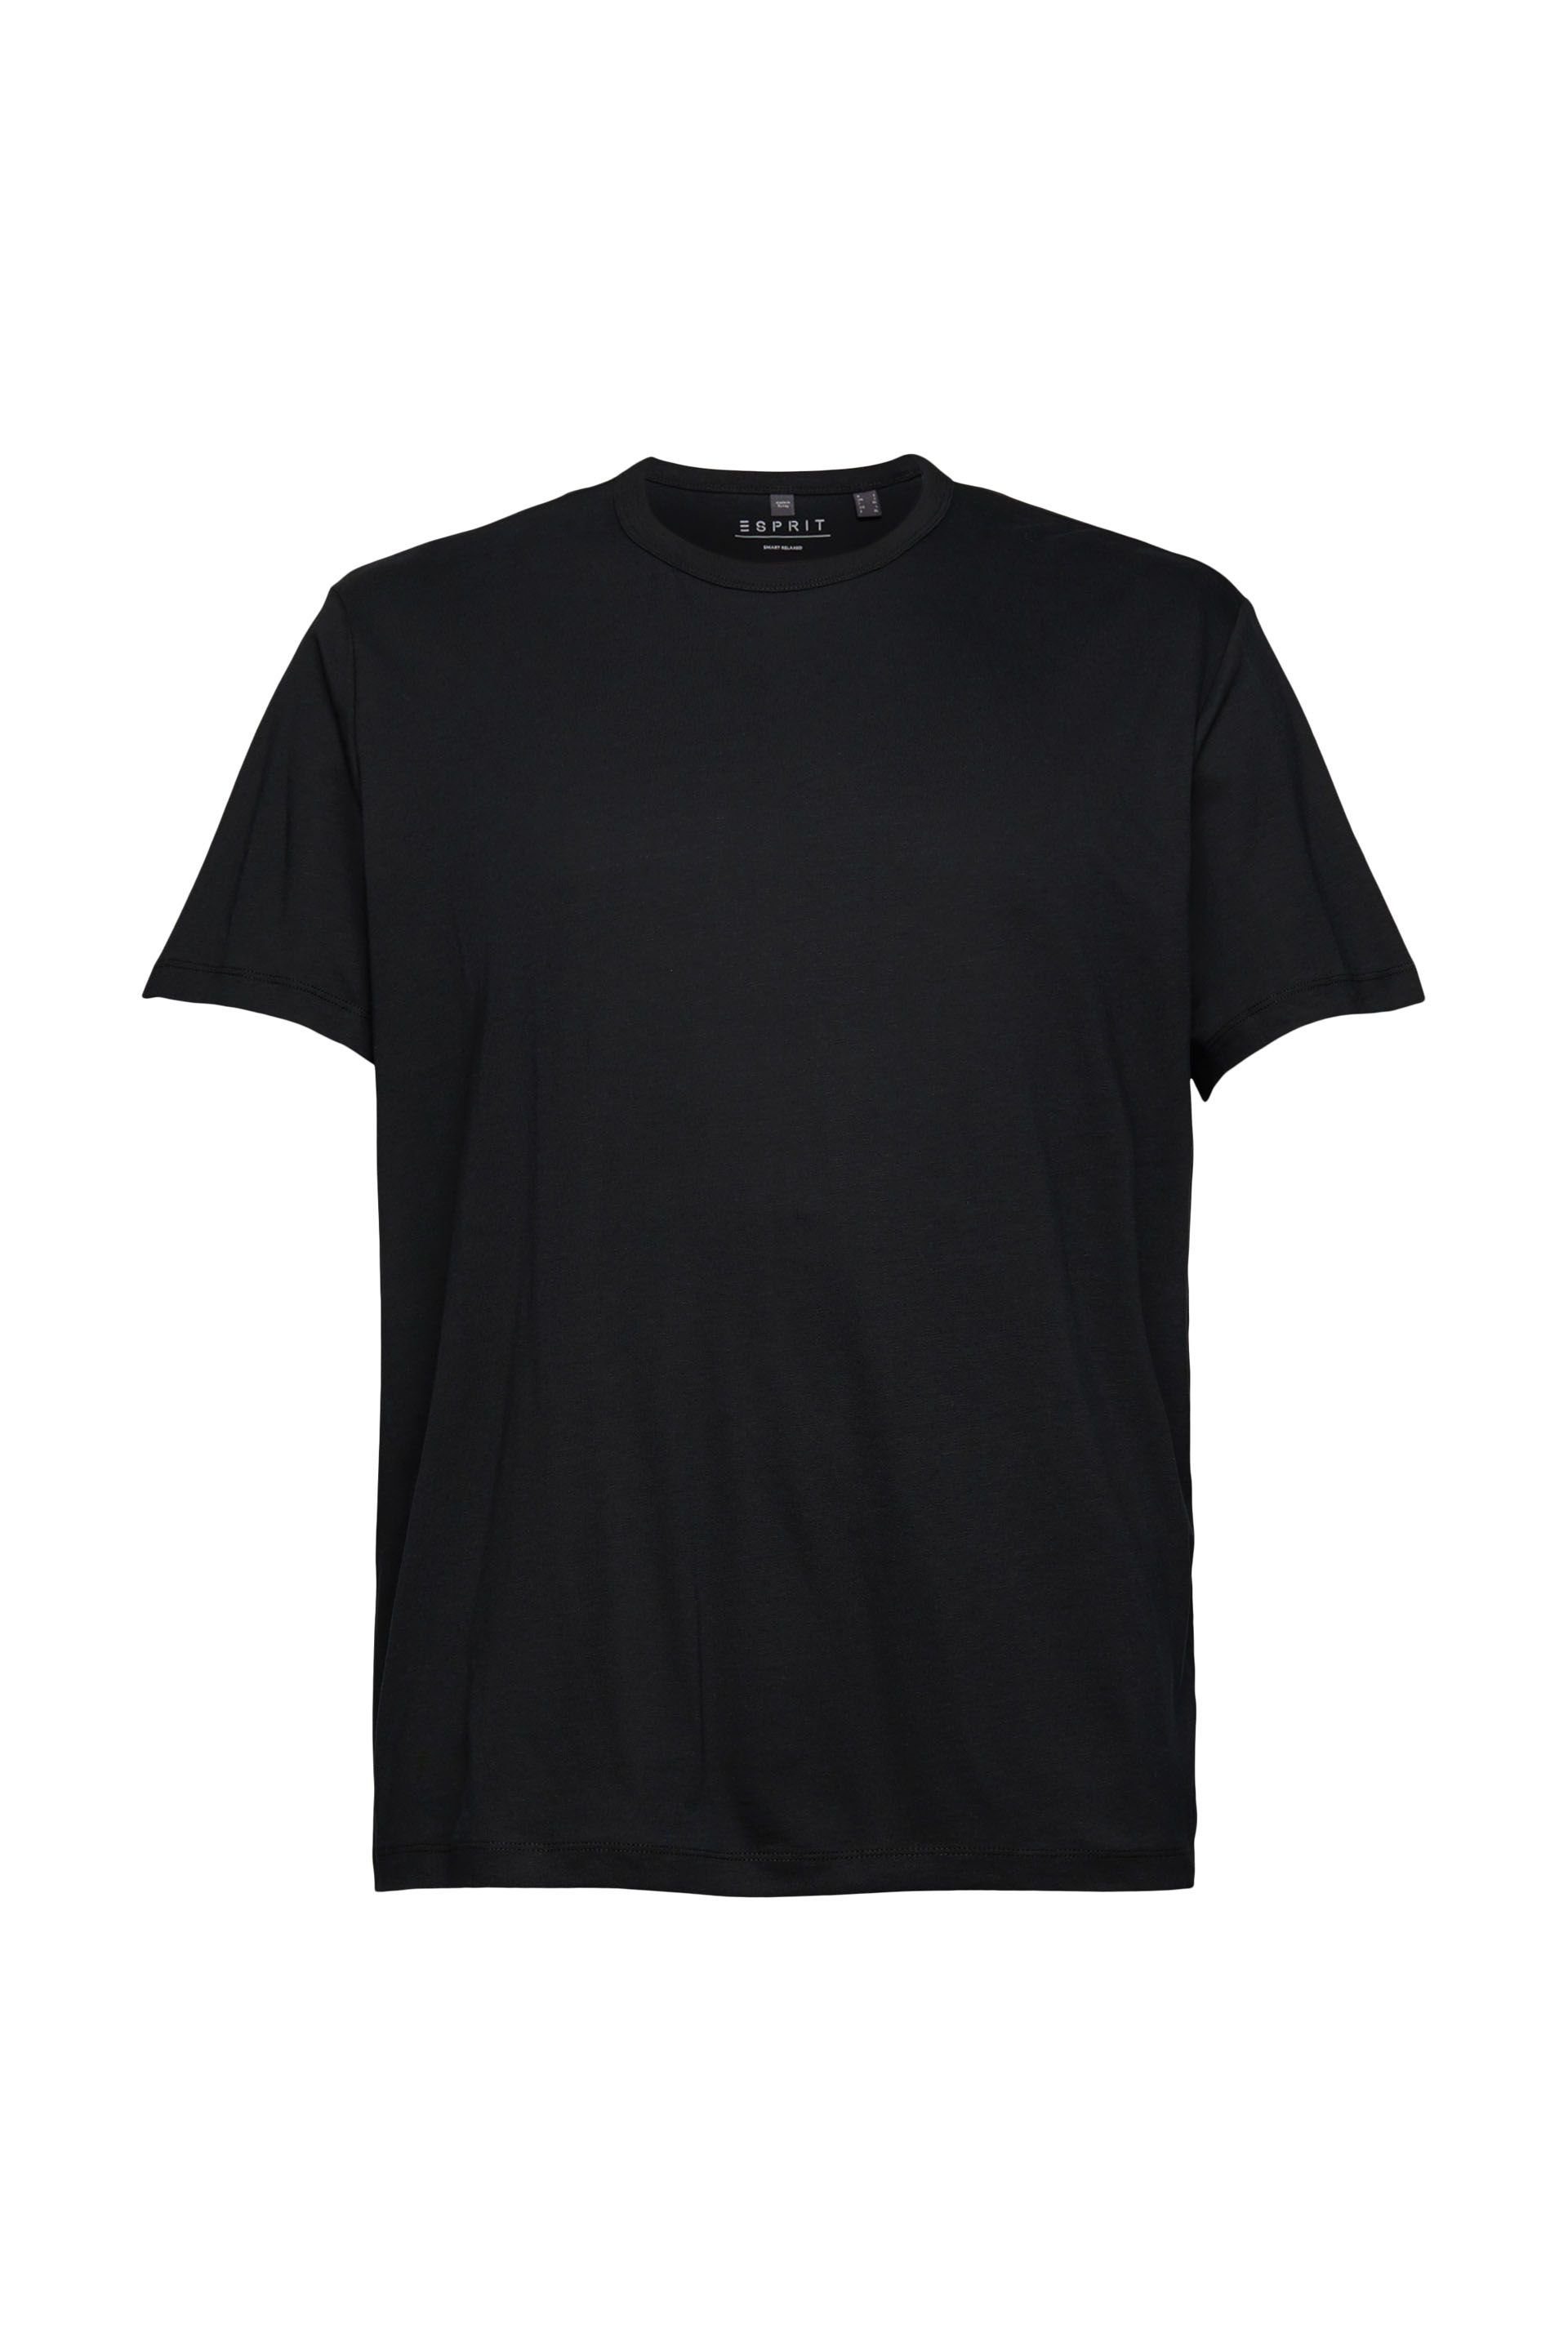 Esprit T-Shirt black